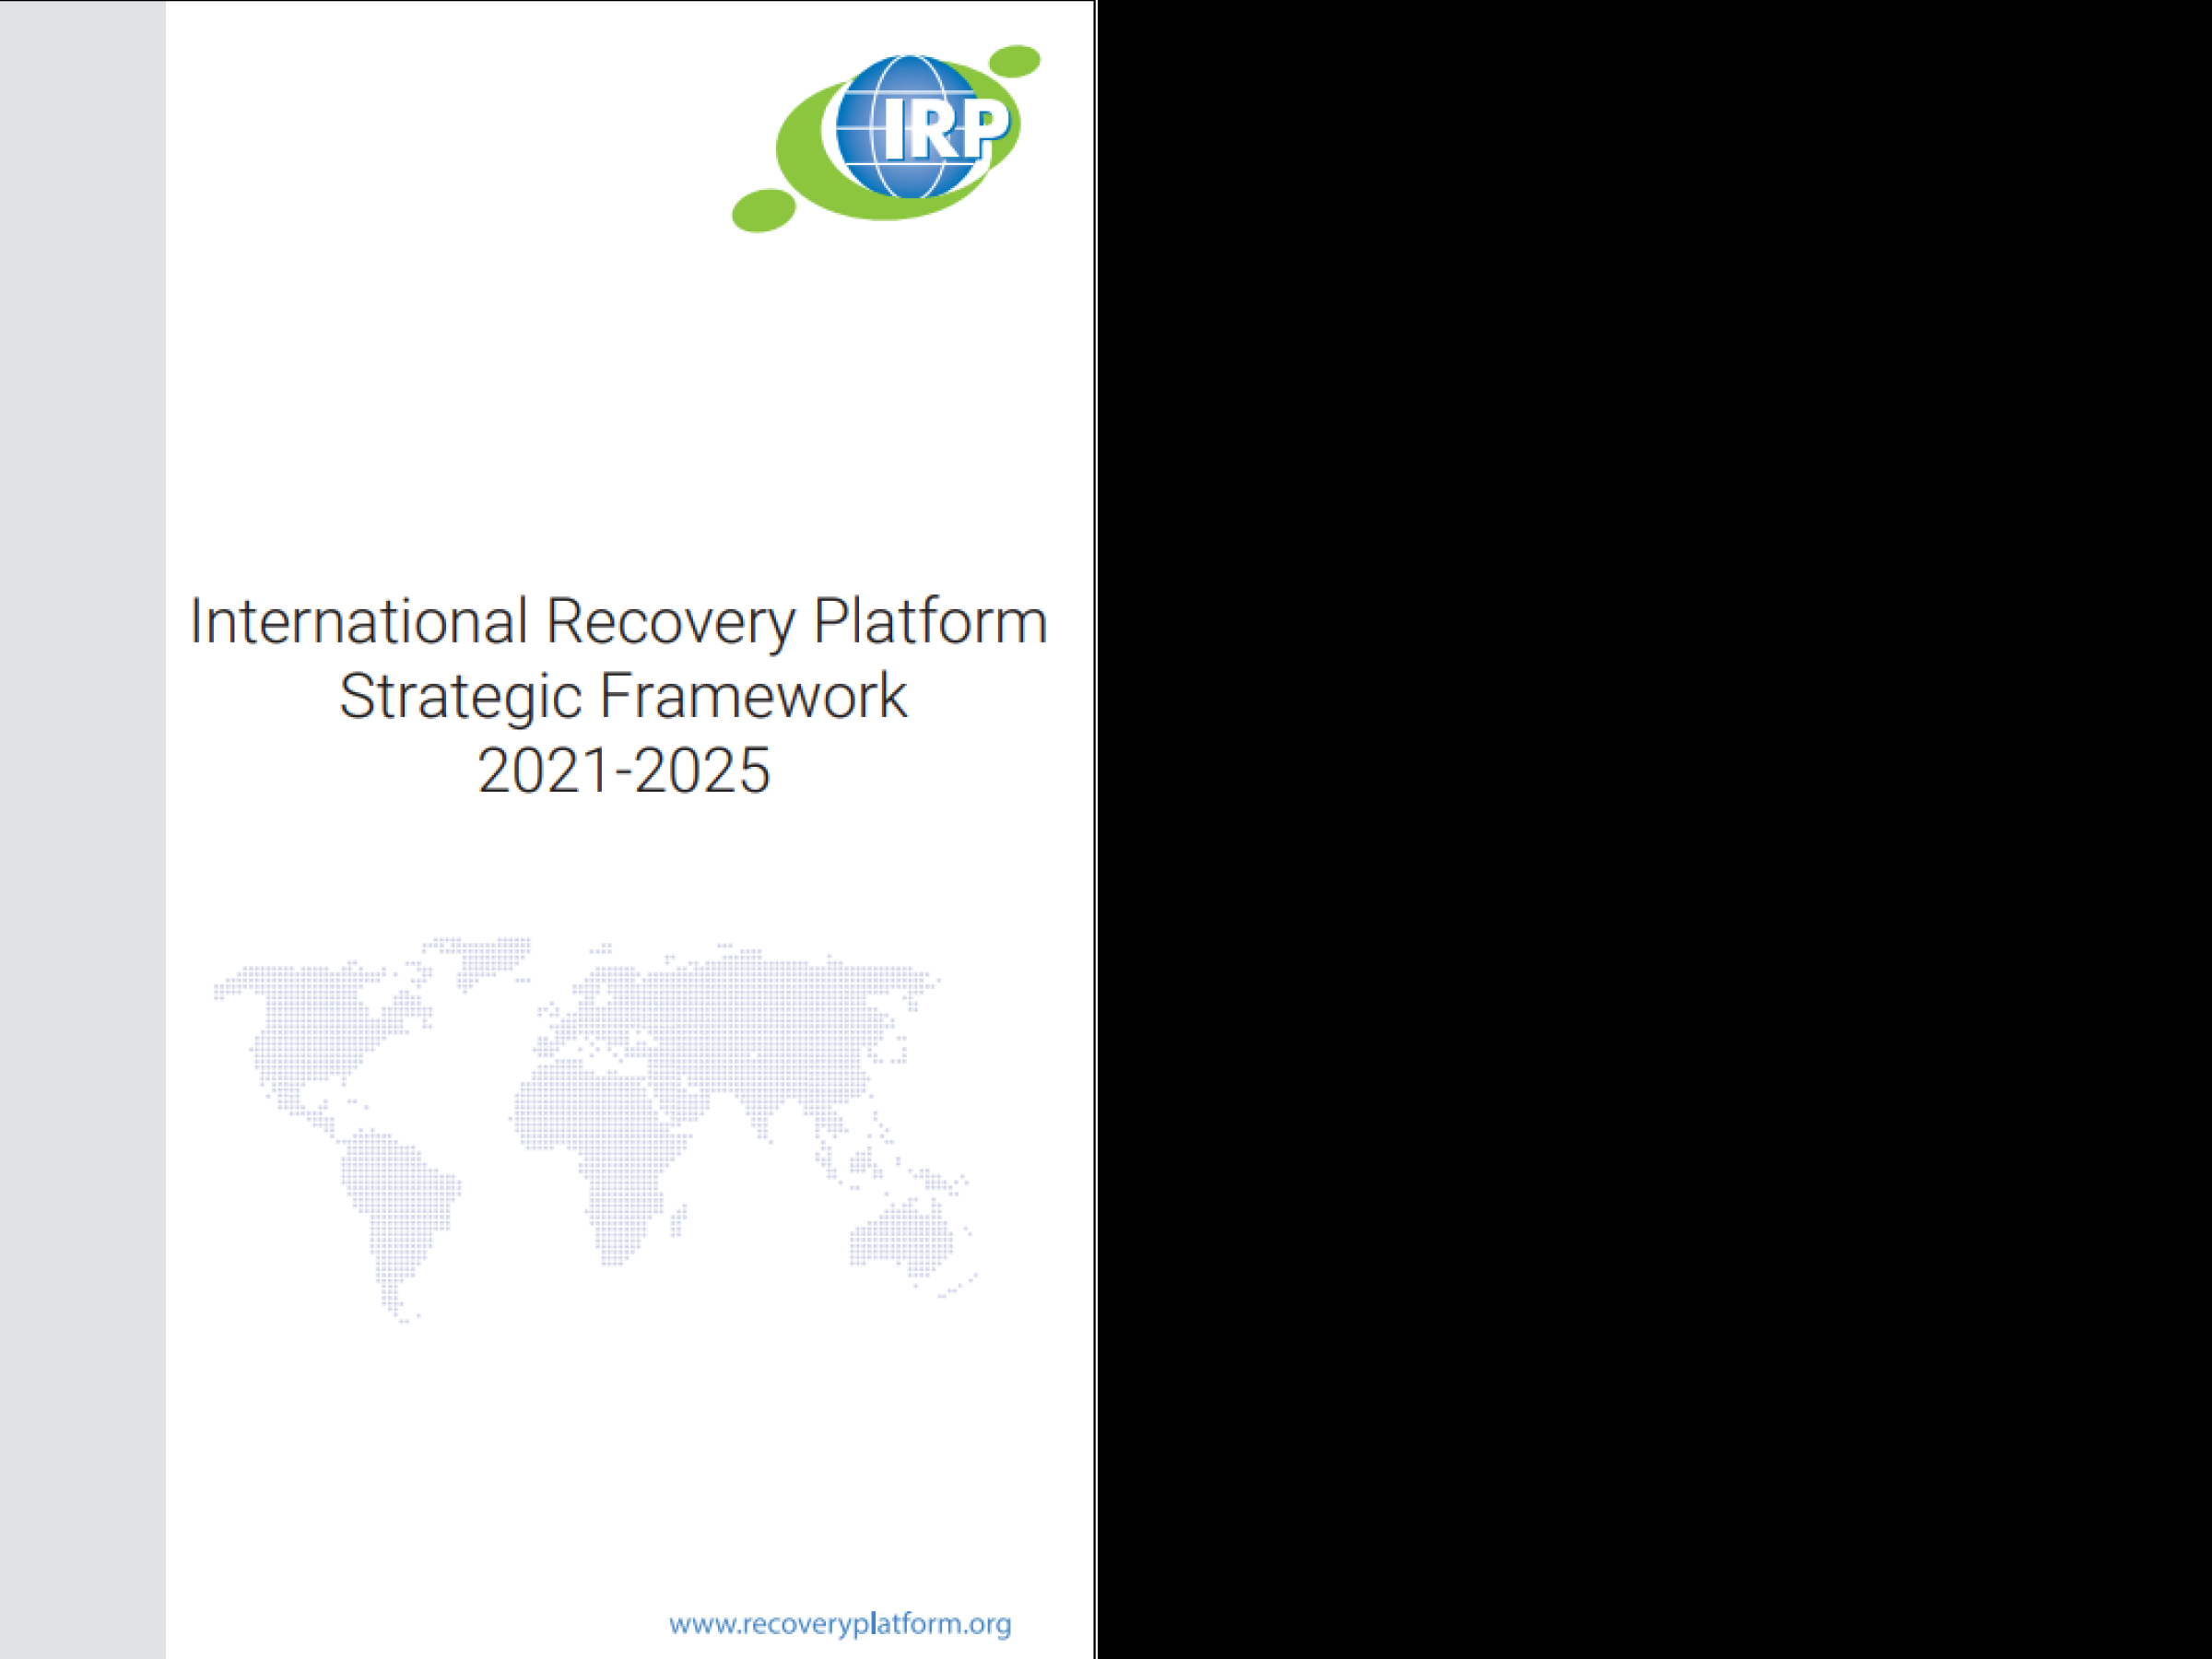 IRP Strategic Framework 2021-2025